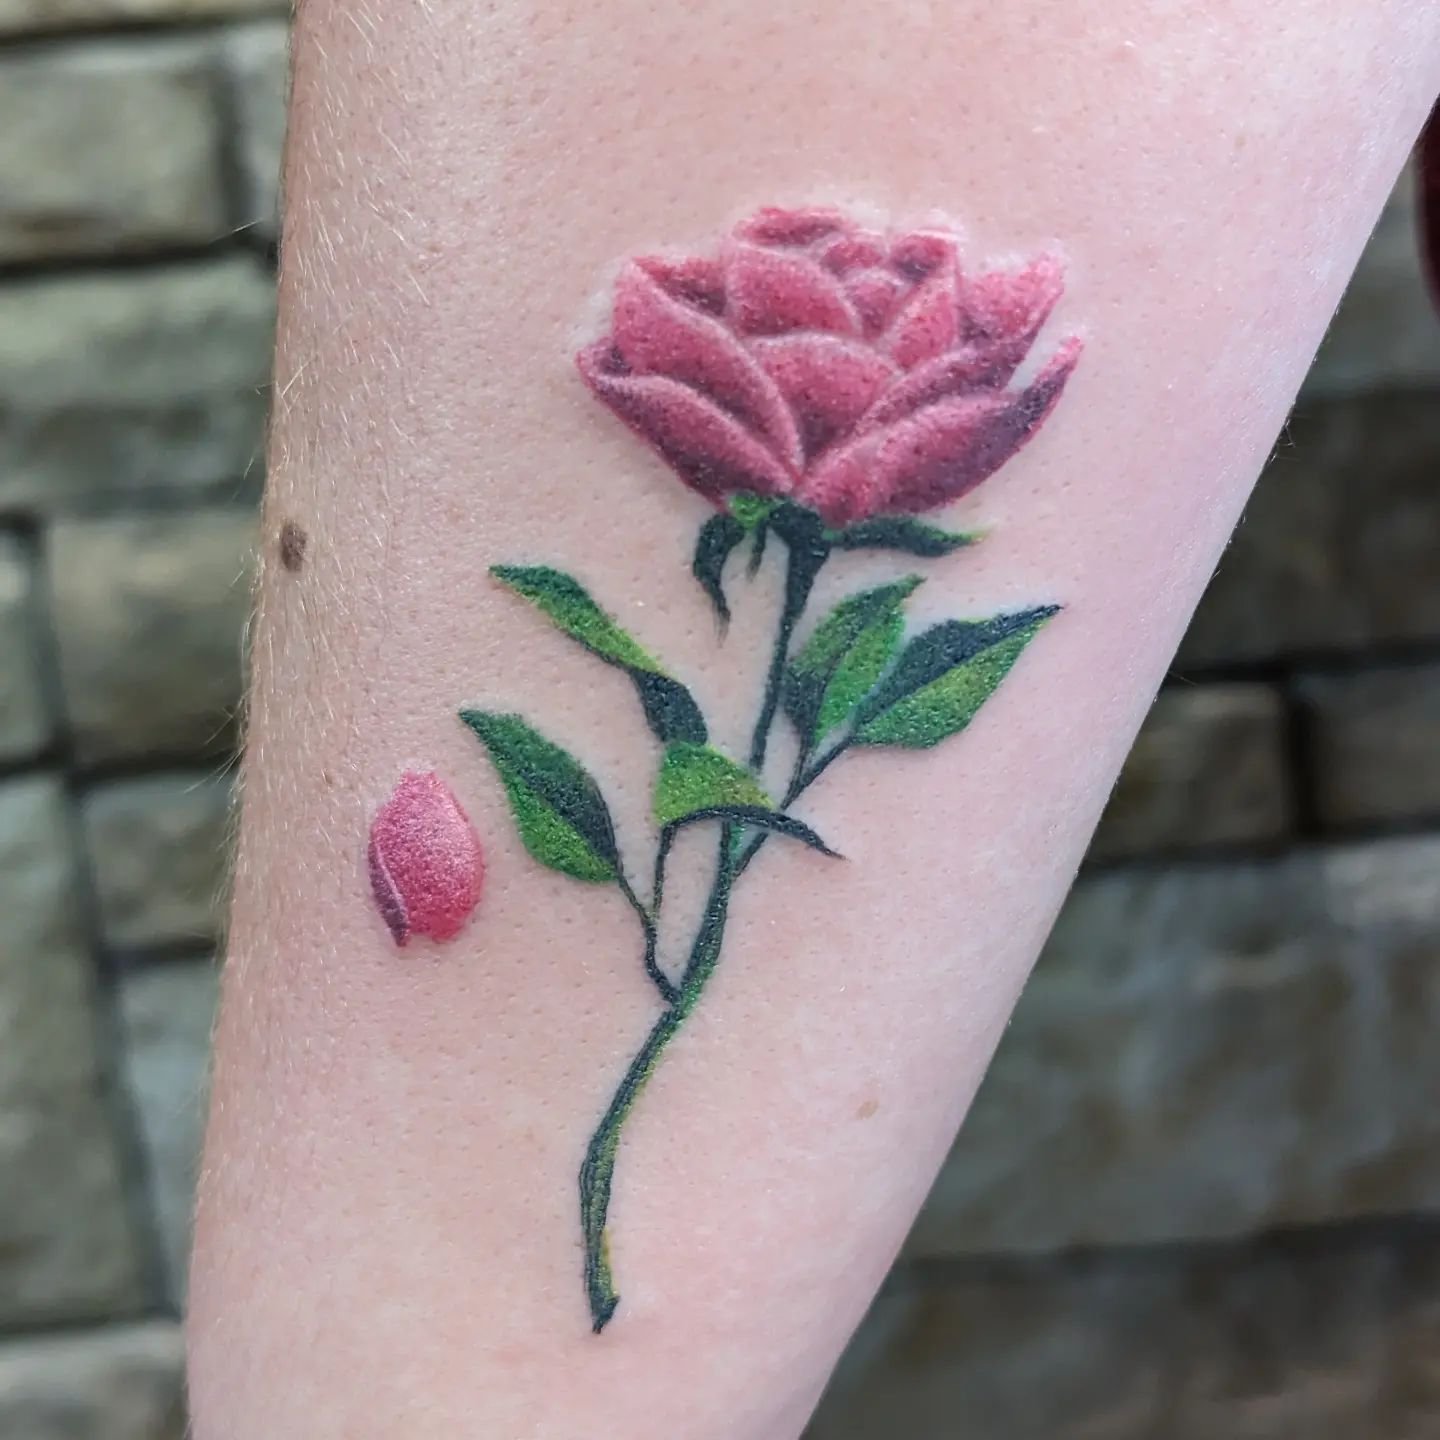 Stylised Rose
By: Nelson
-
-
-
-
#tattoo #tattooartist #ottawatattoo #orleansontario #ottawaontario #qualitytattoo #besttattoo #colourtattoo #rosetattoo #flowertattoo #613tattoo #art #design #inkculture #ottawa